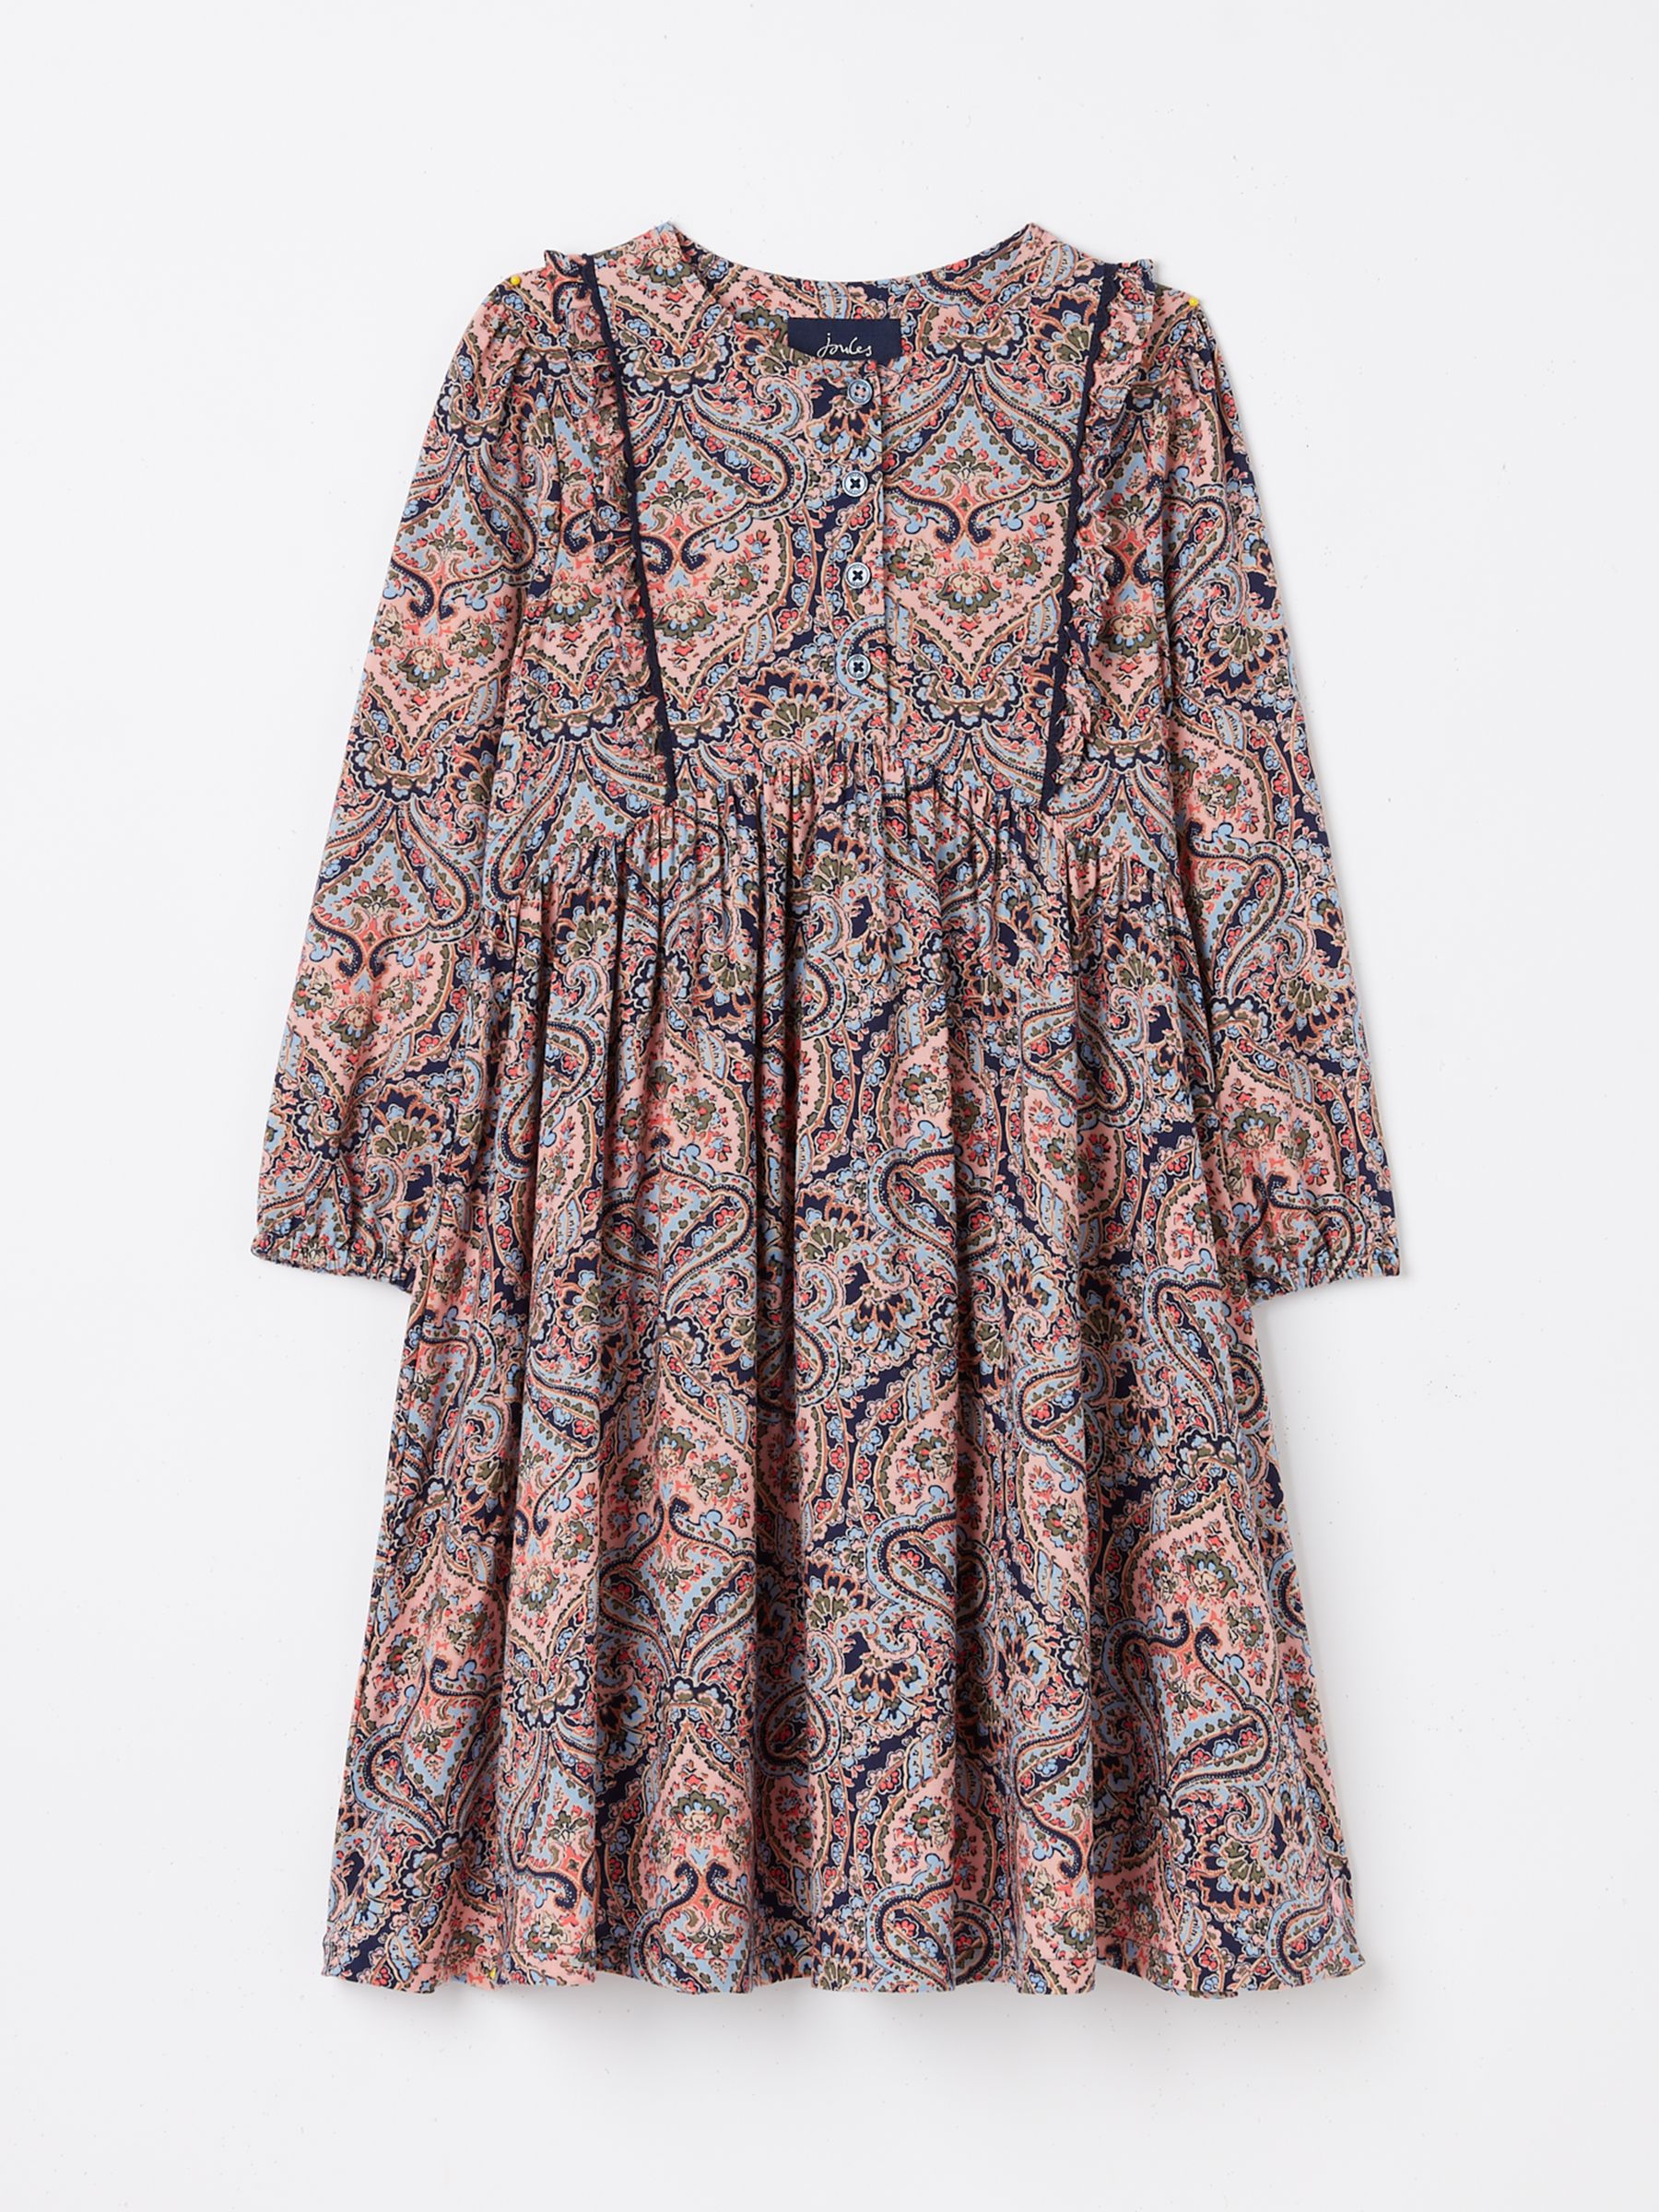 Buy Bekah Multi Paisley Print Dress from the Joules online shop